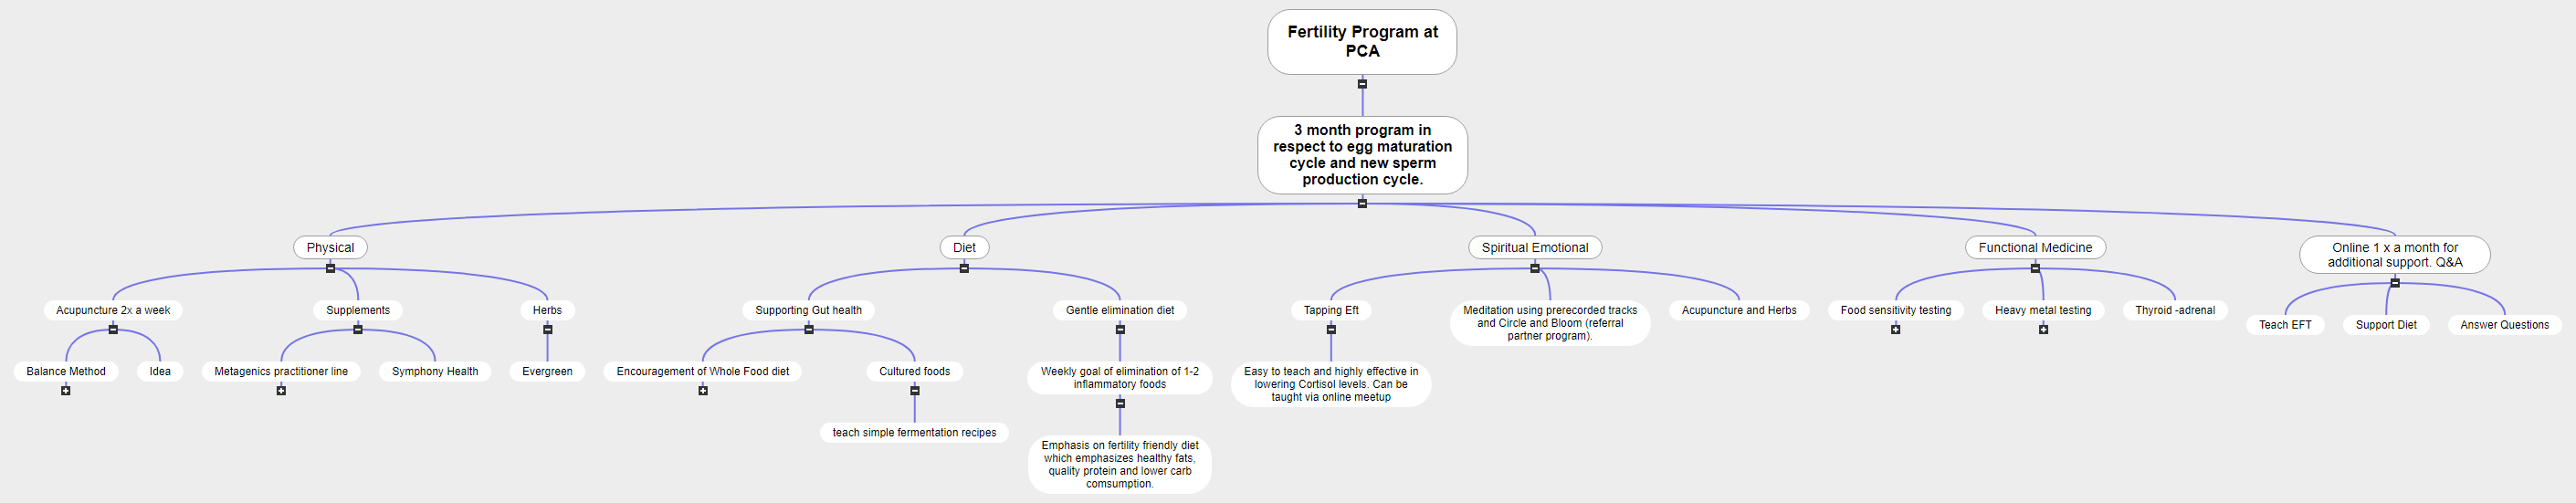 Fertility Program at PCA1 Mind Map